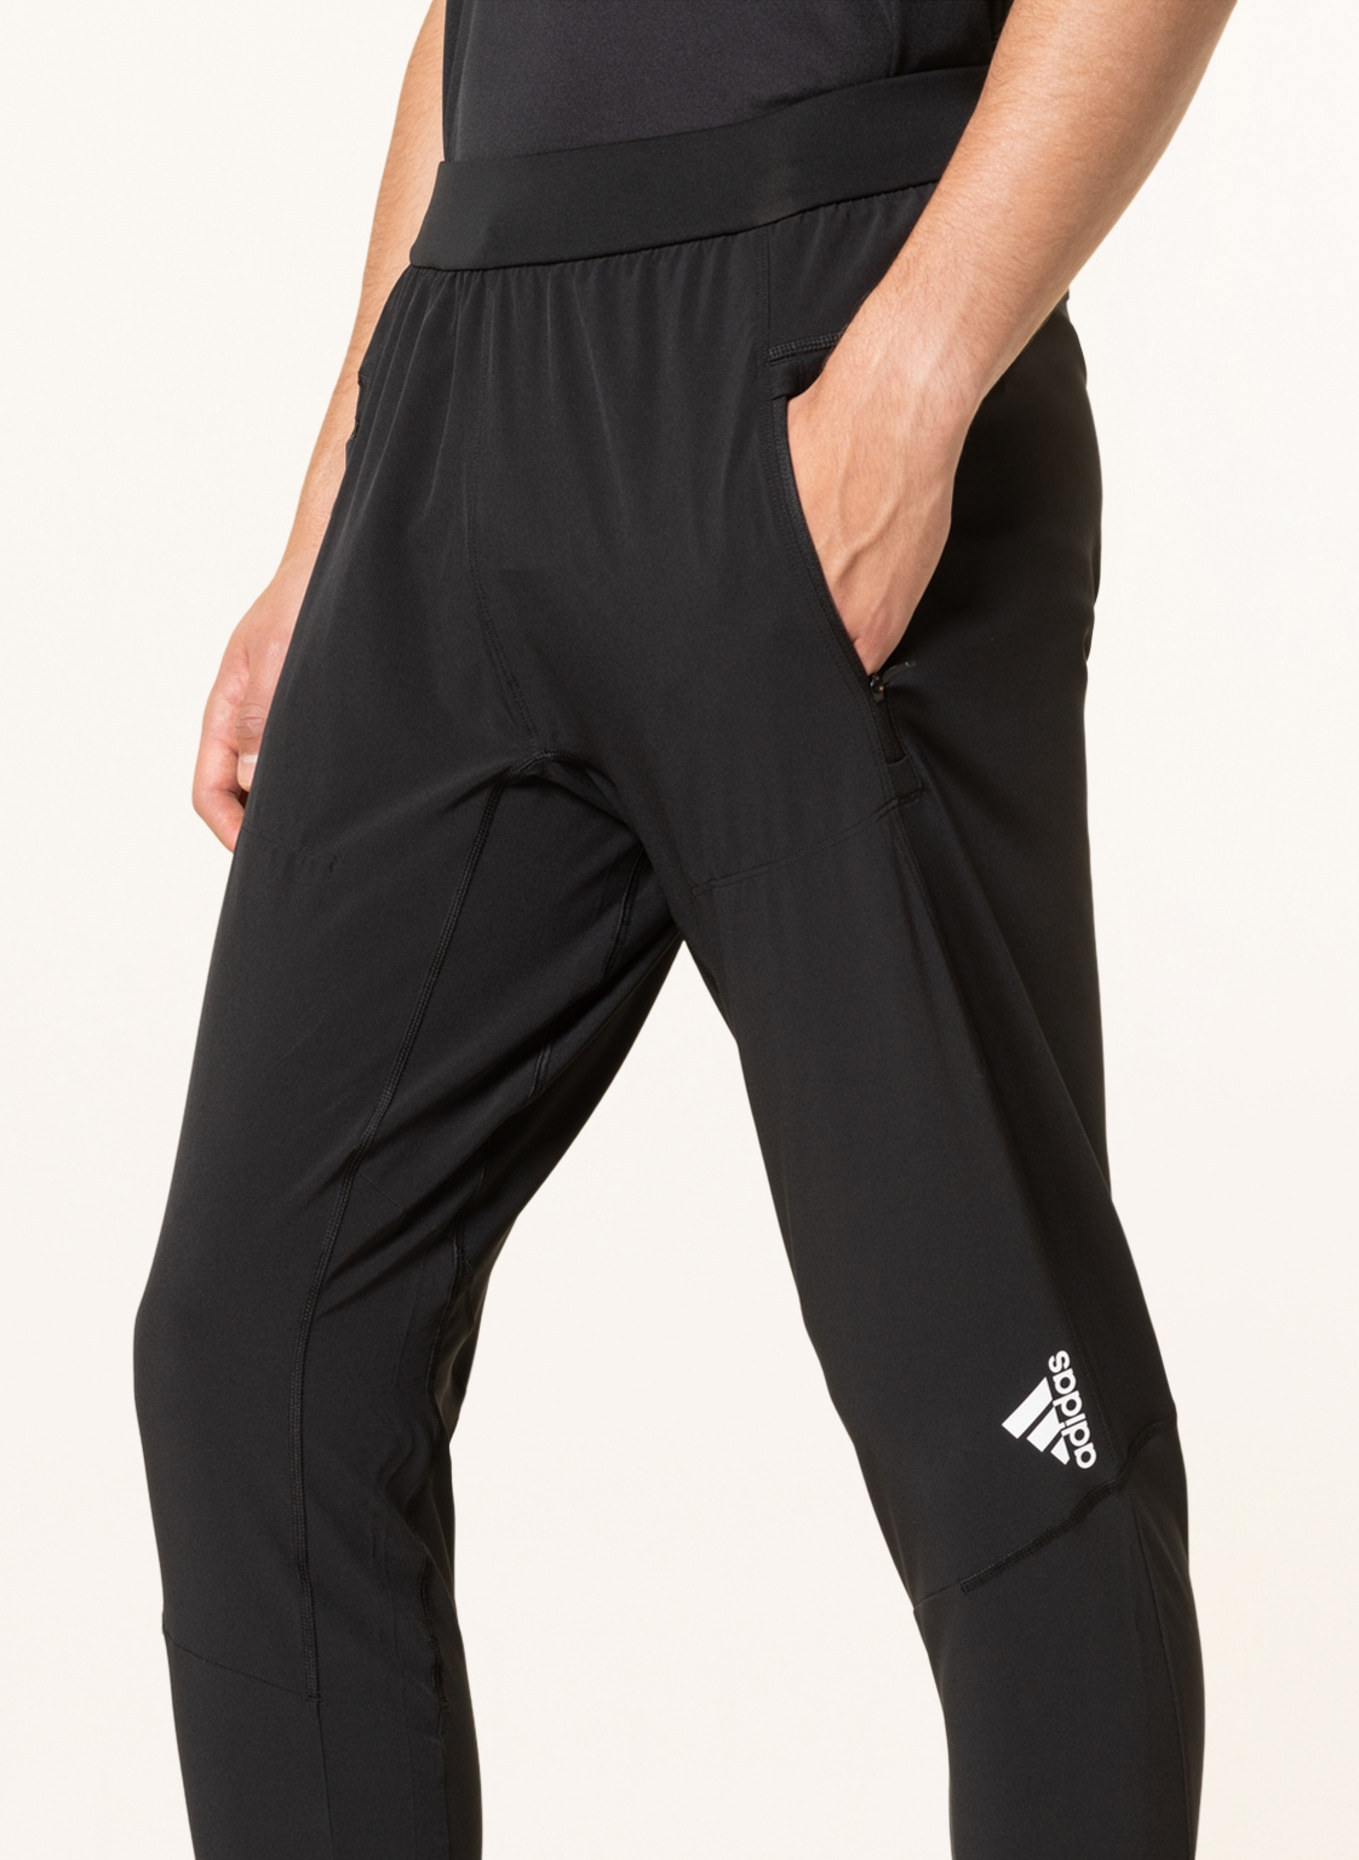 adidas Men's Designed for Training Yoga 7/8 Pants | Dick's Sporting Goods